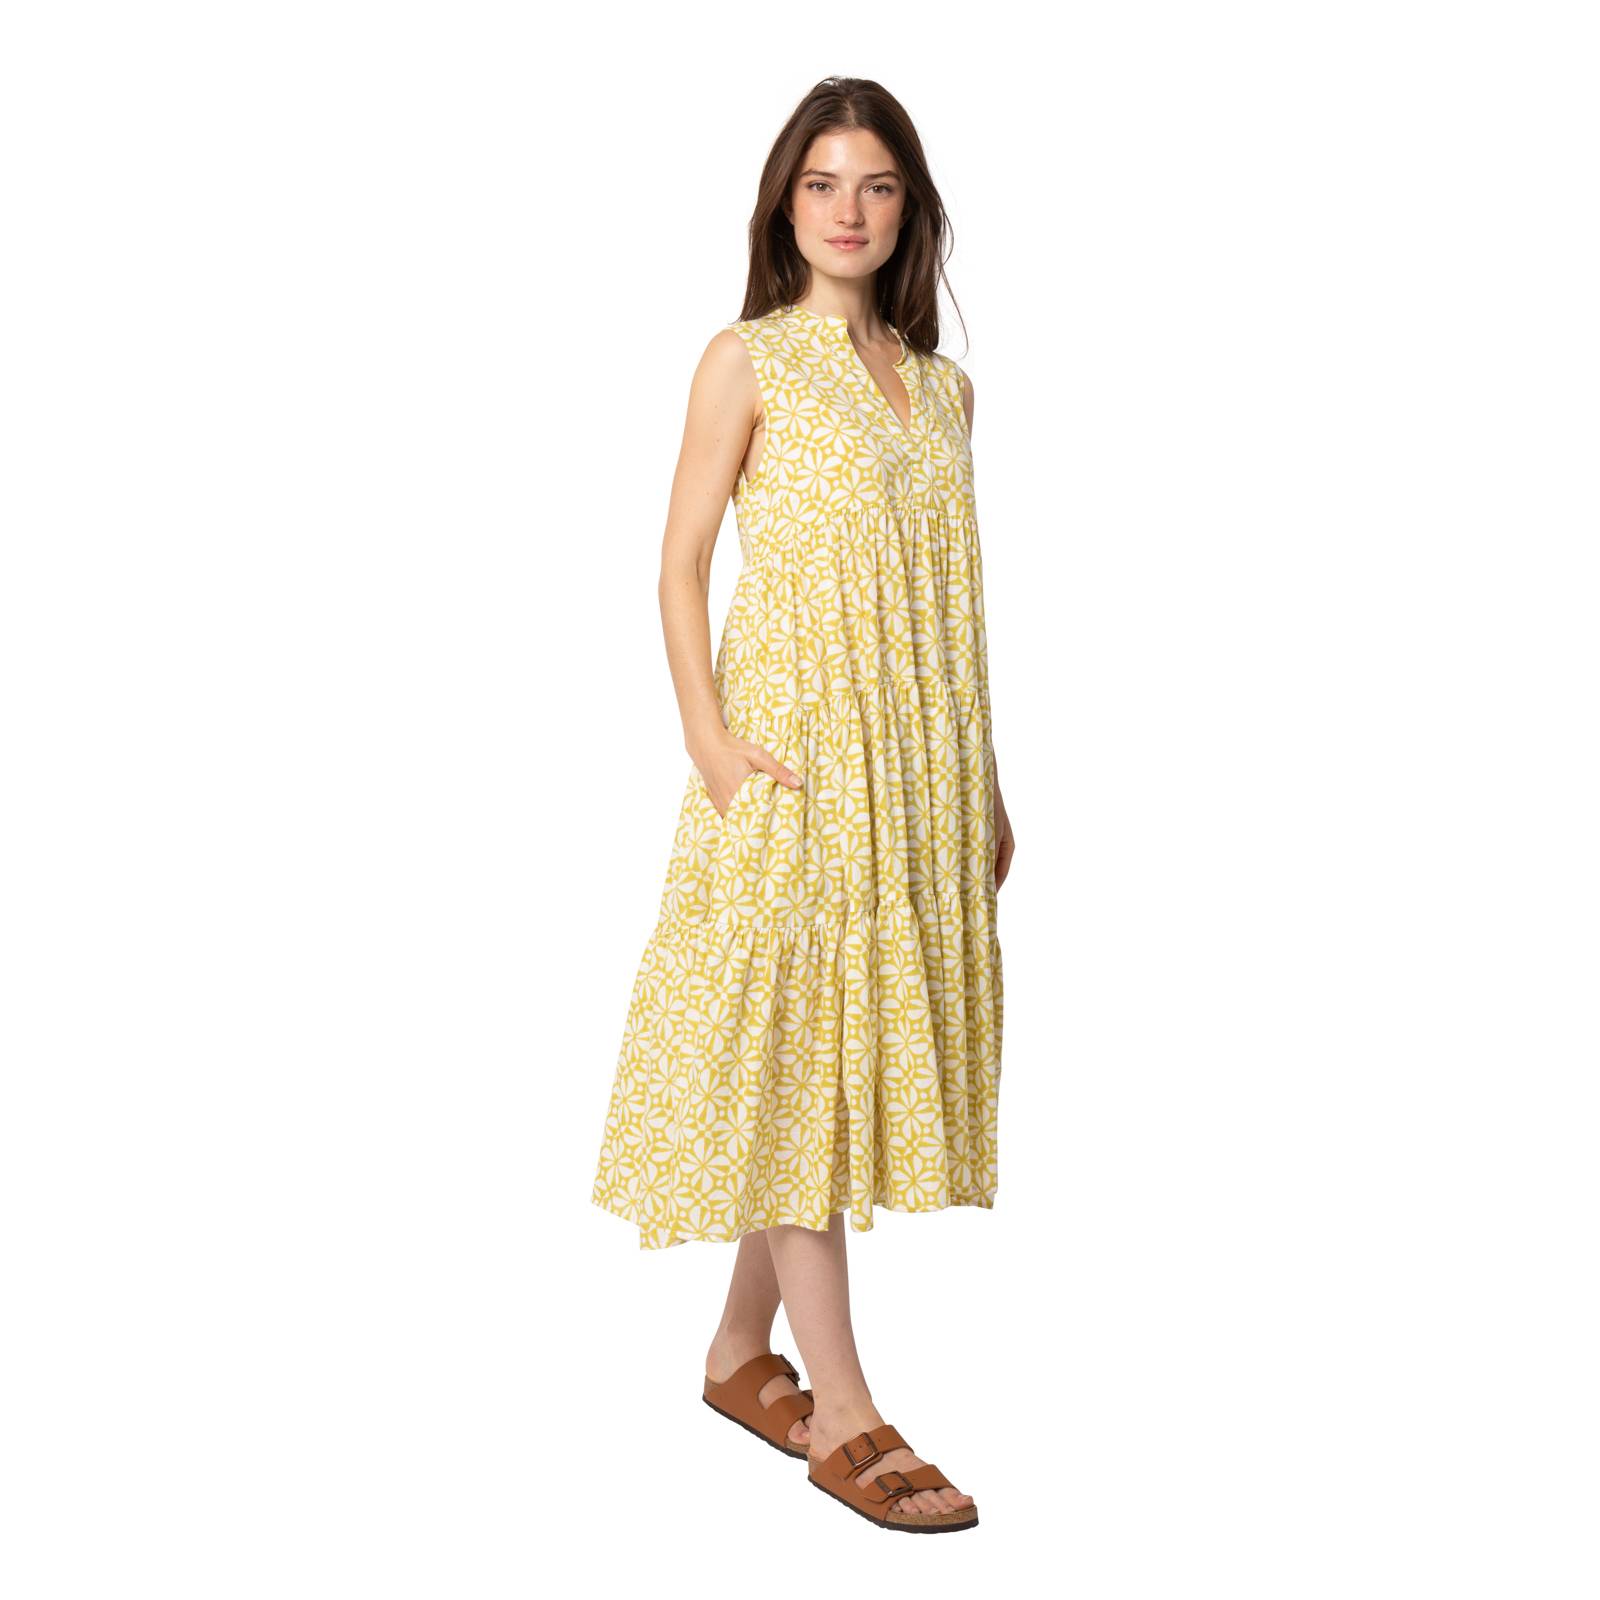 Robes Robe Margaret Petal 100% Organic Cotton Ethnique VR3103 YELLOW FLAVE